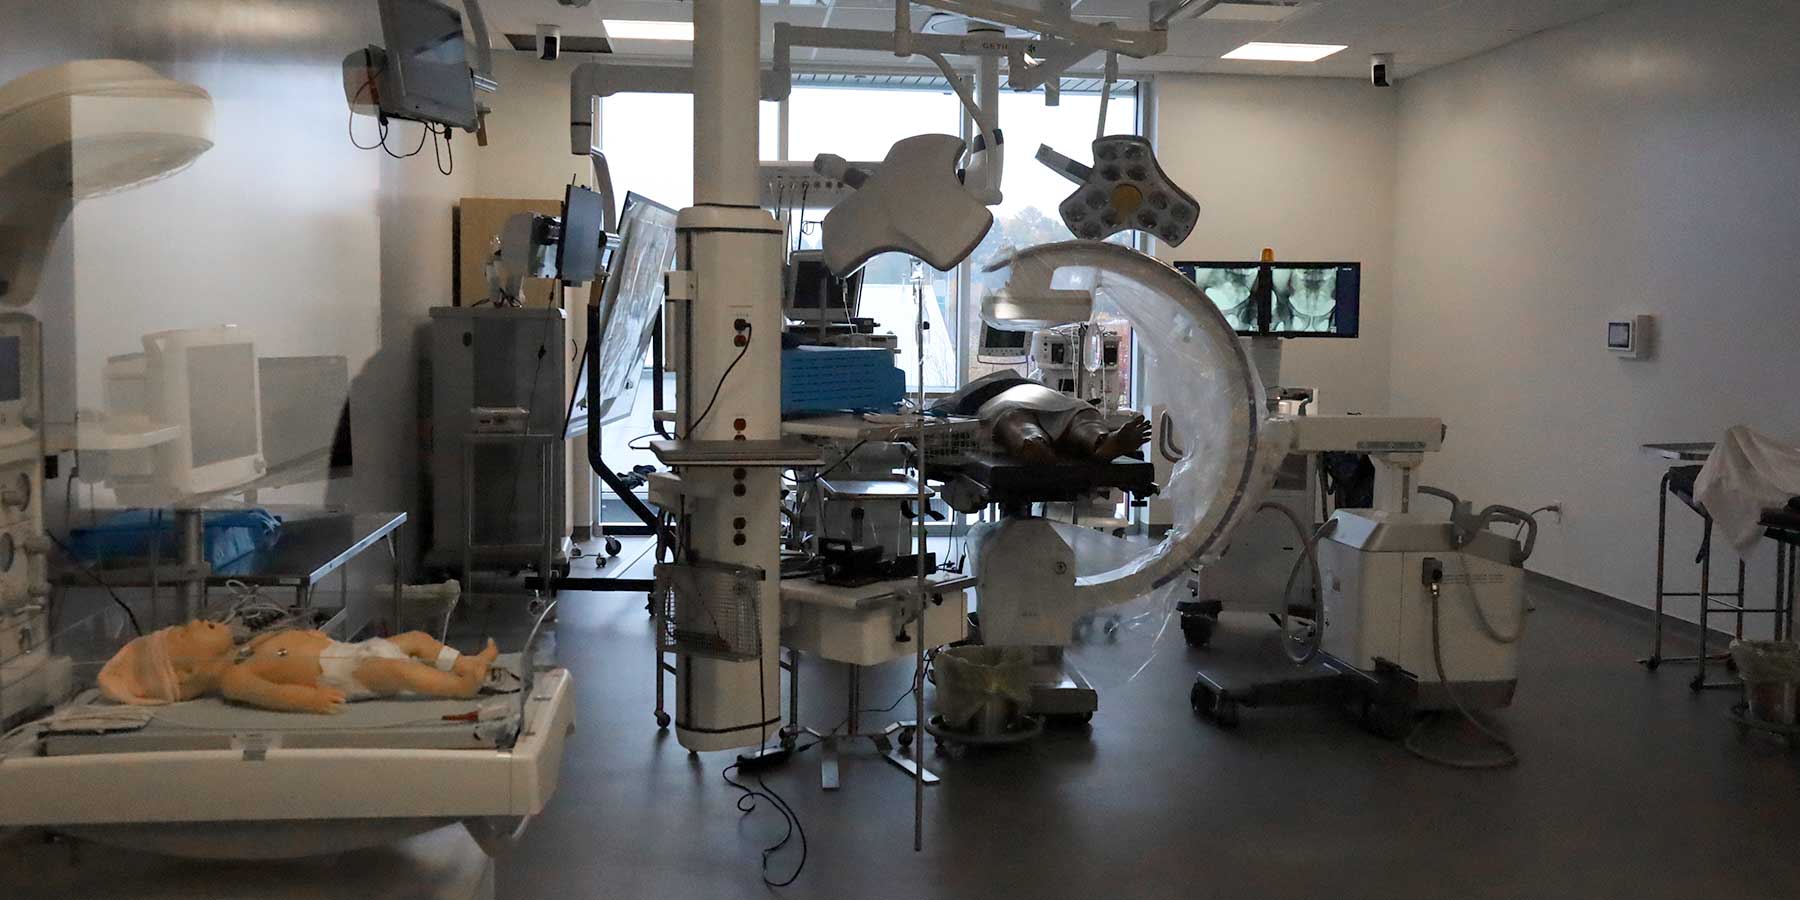 BCIT health sciences centre operating room full of medical equipment